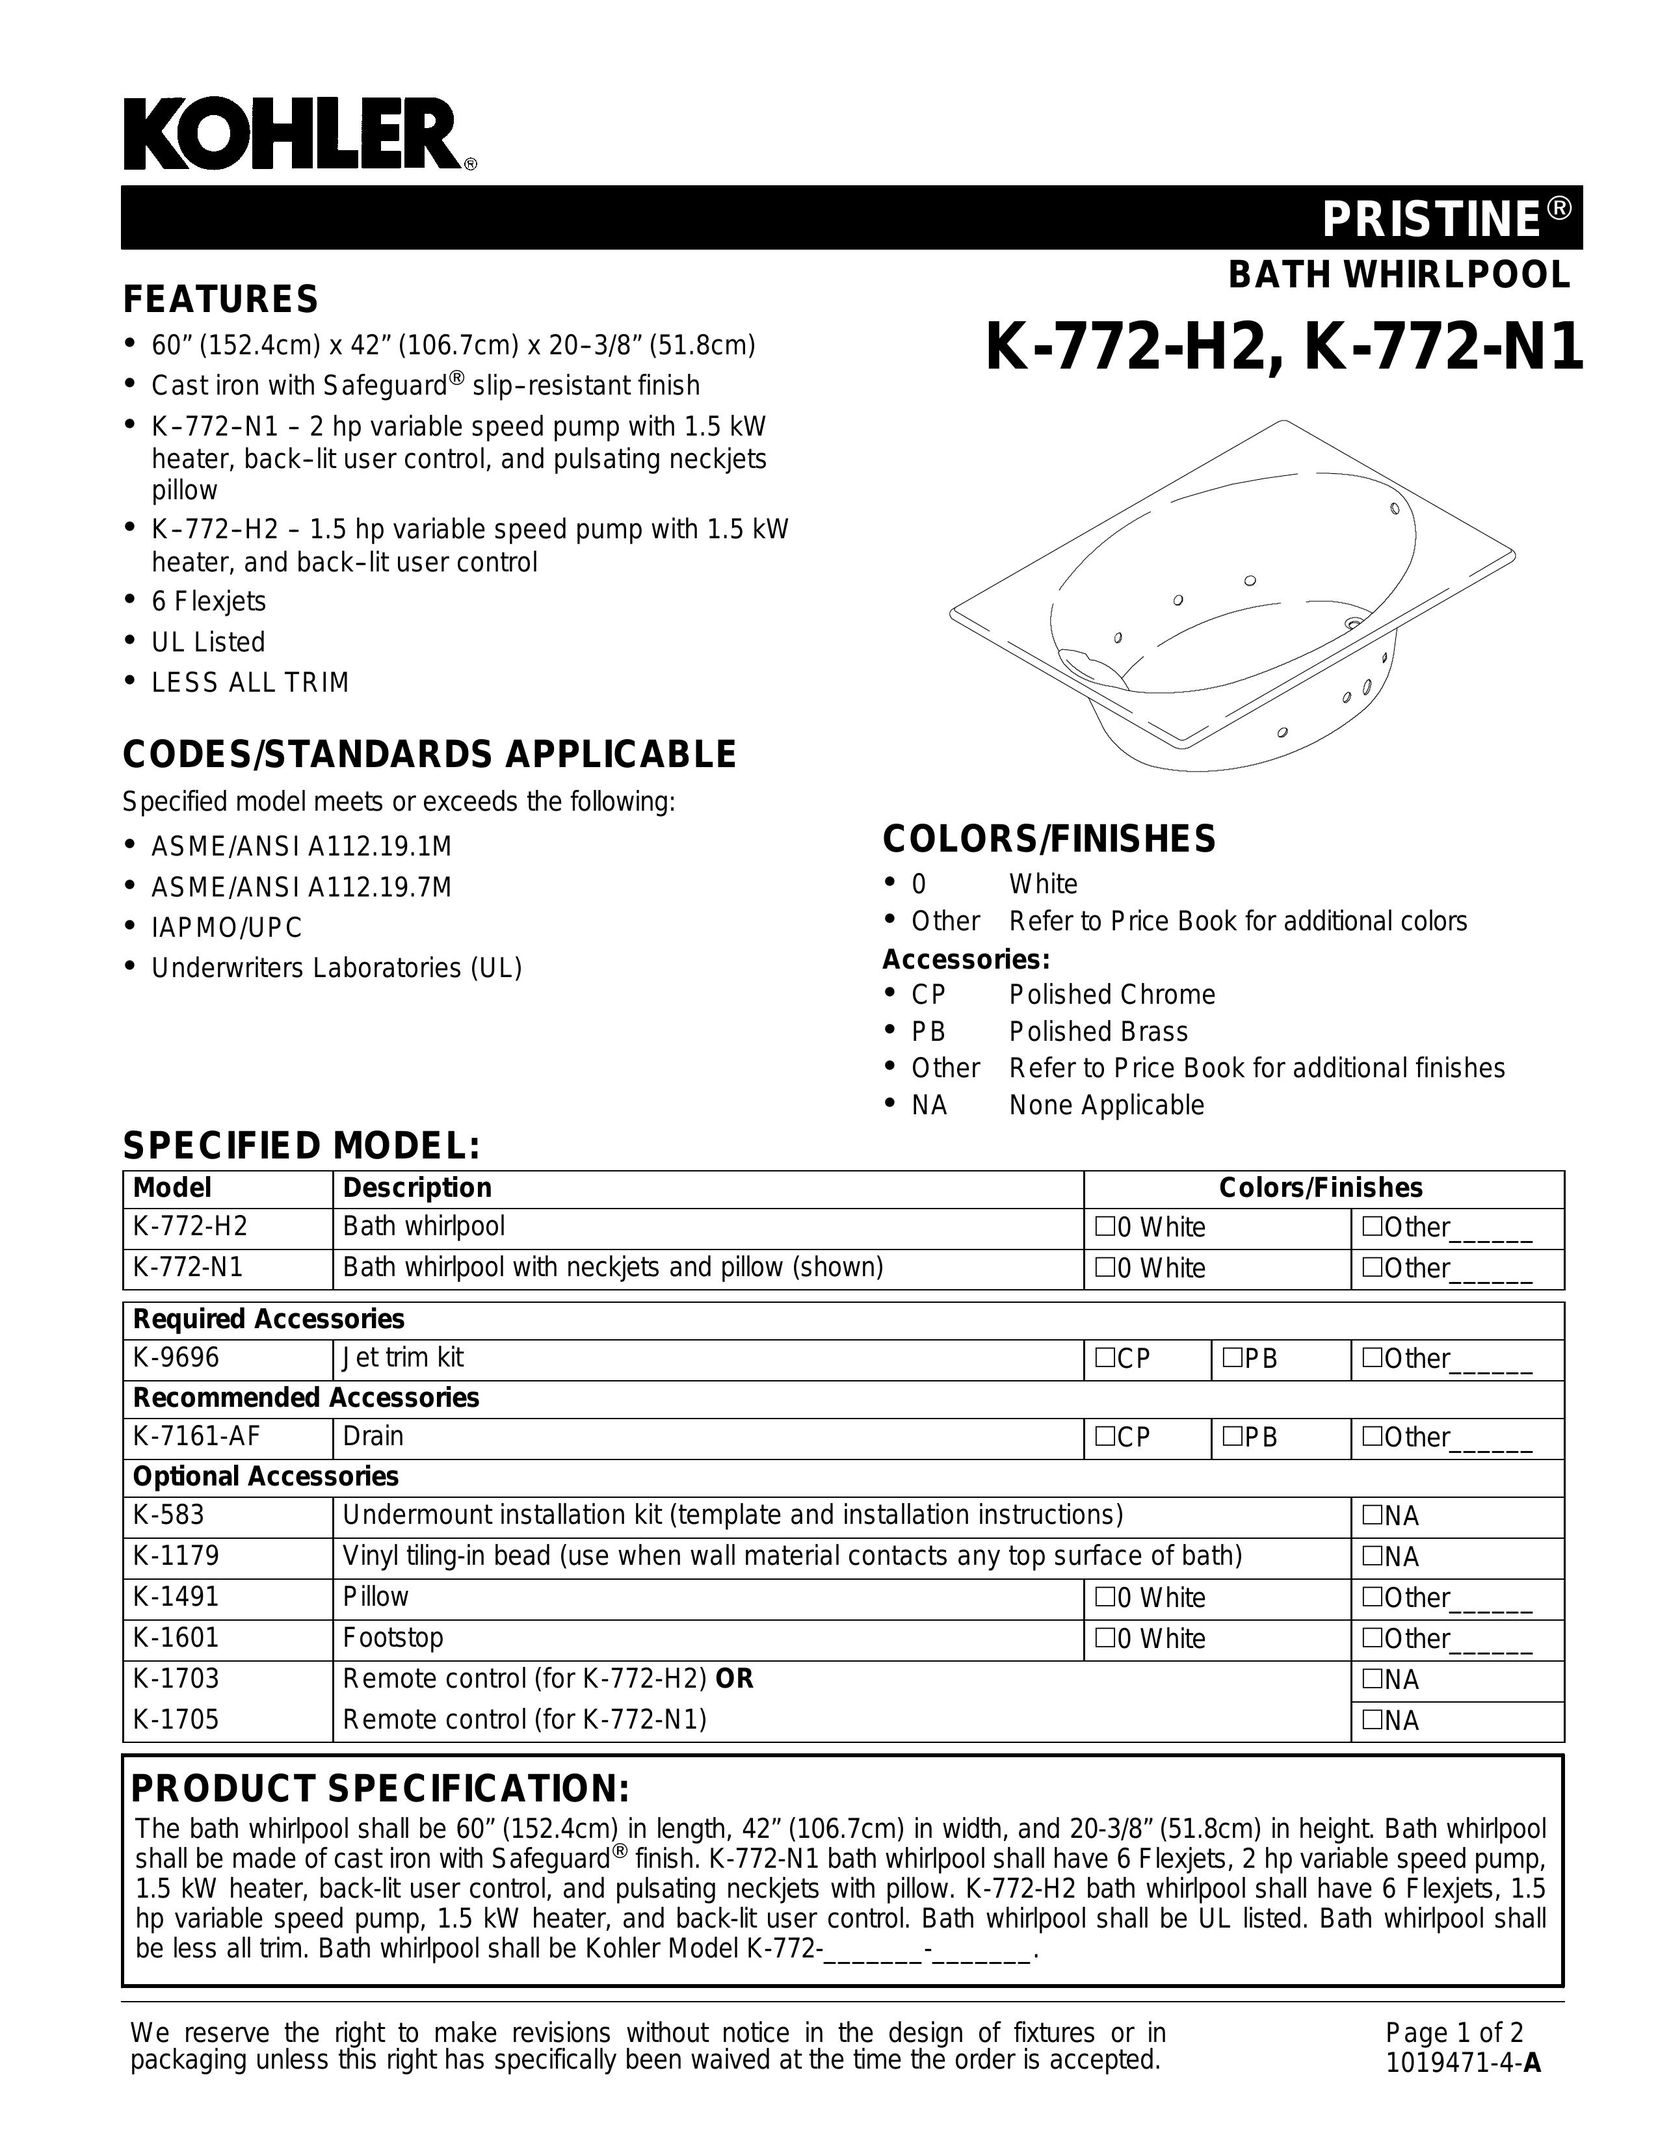 Kohler K-1703 Universal Remote User Manual